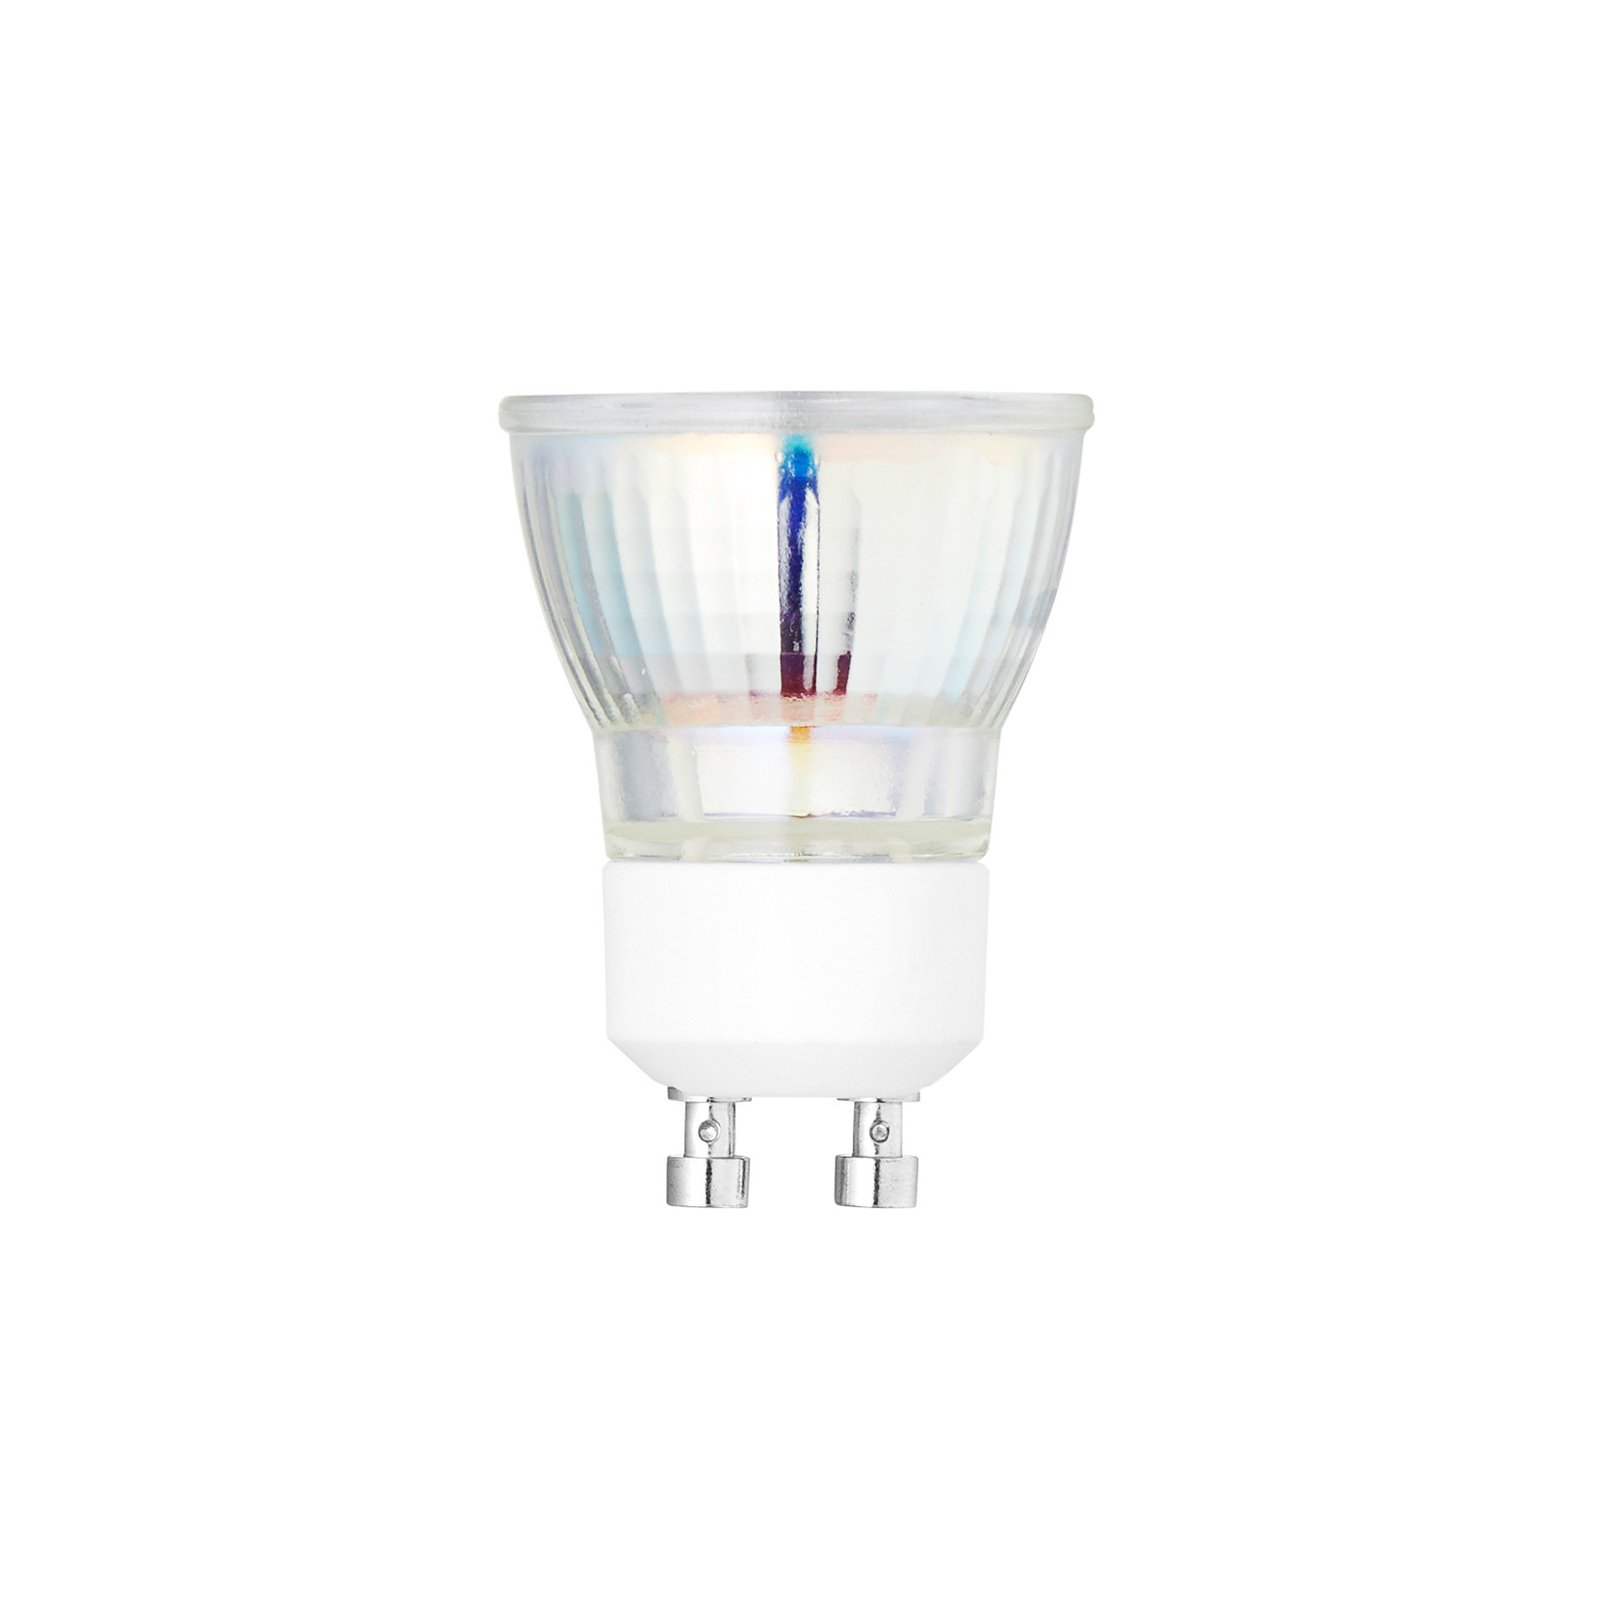 Mini spot LED bulb, GU10, 3.5 W, 3,000 K, dimmable